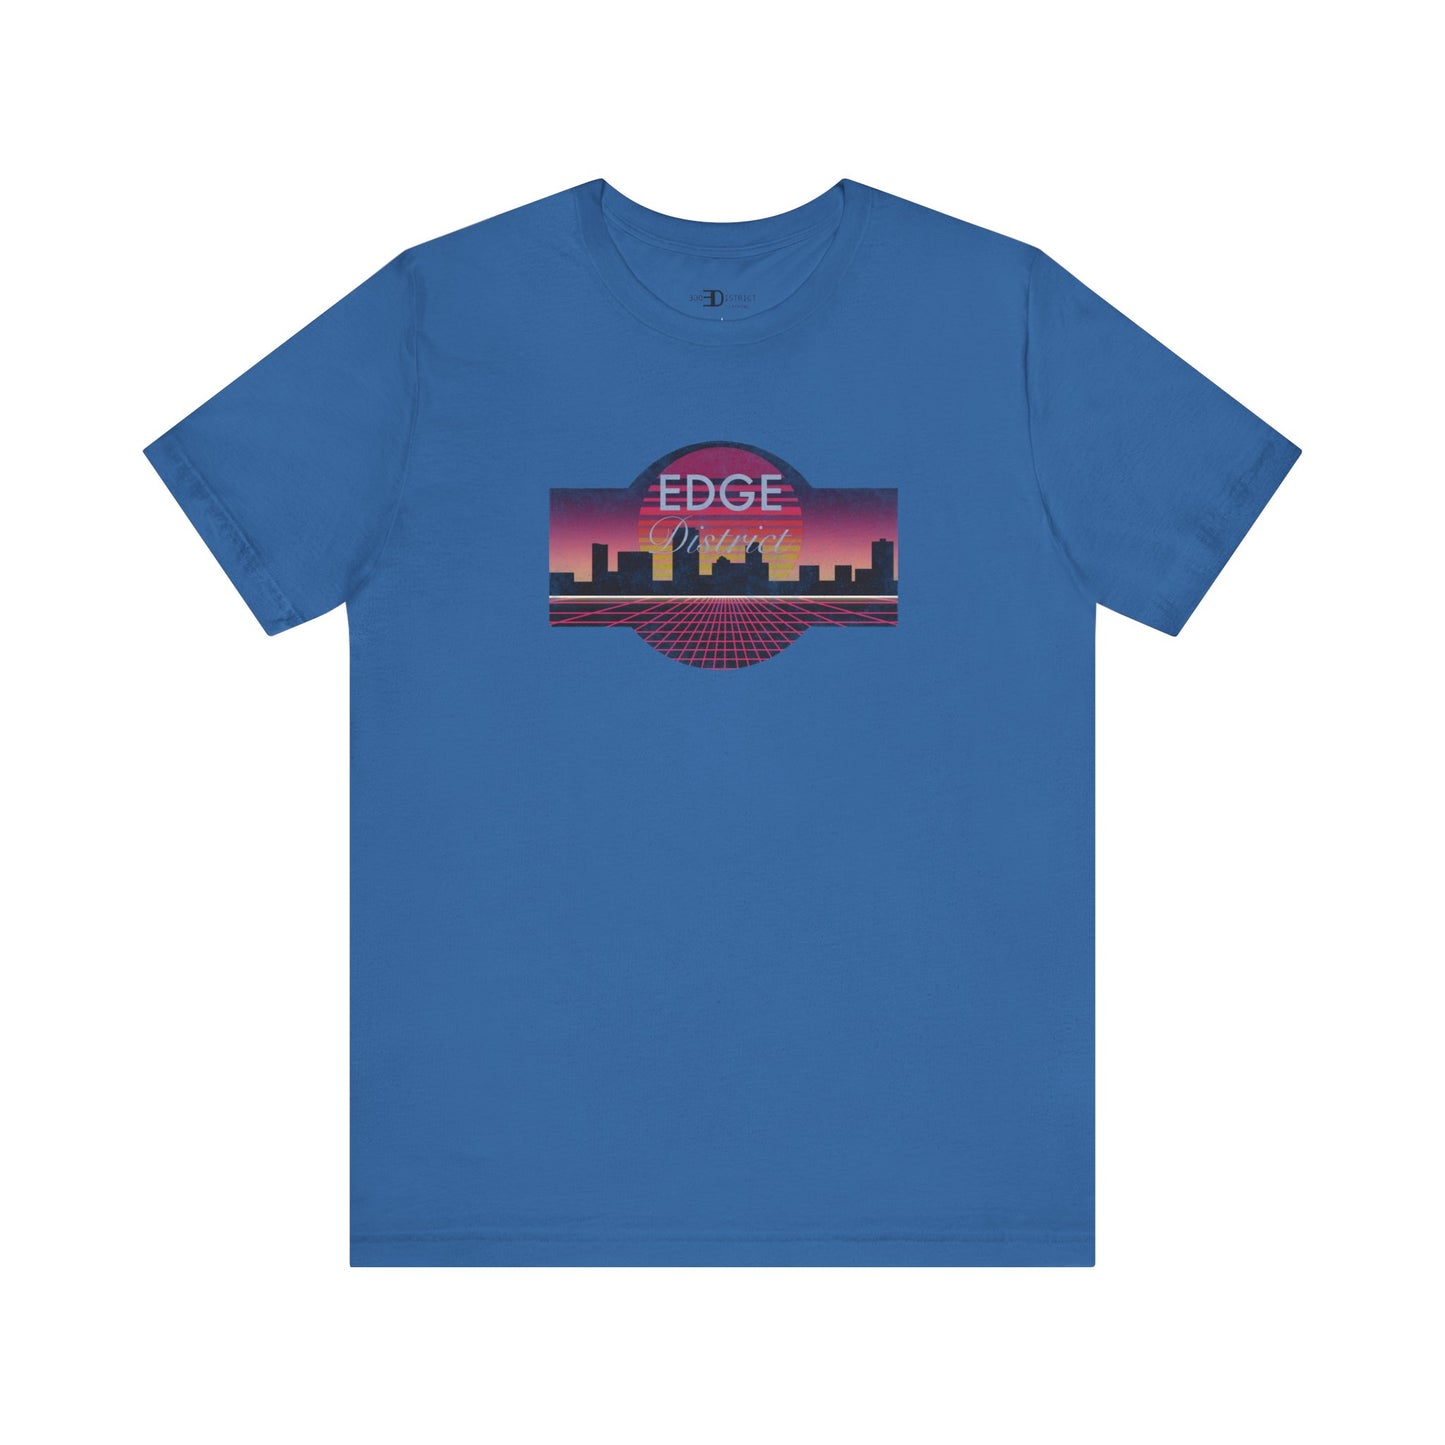 Edge District 80s Inspired Unisex T-shirt